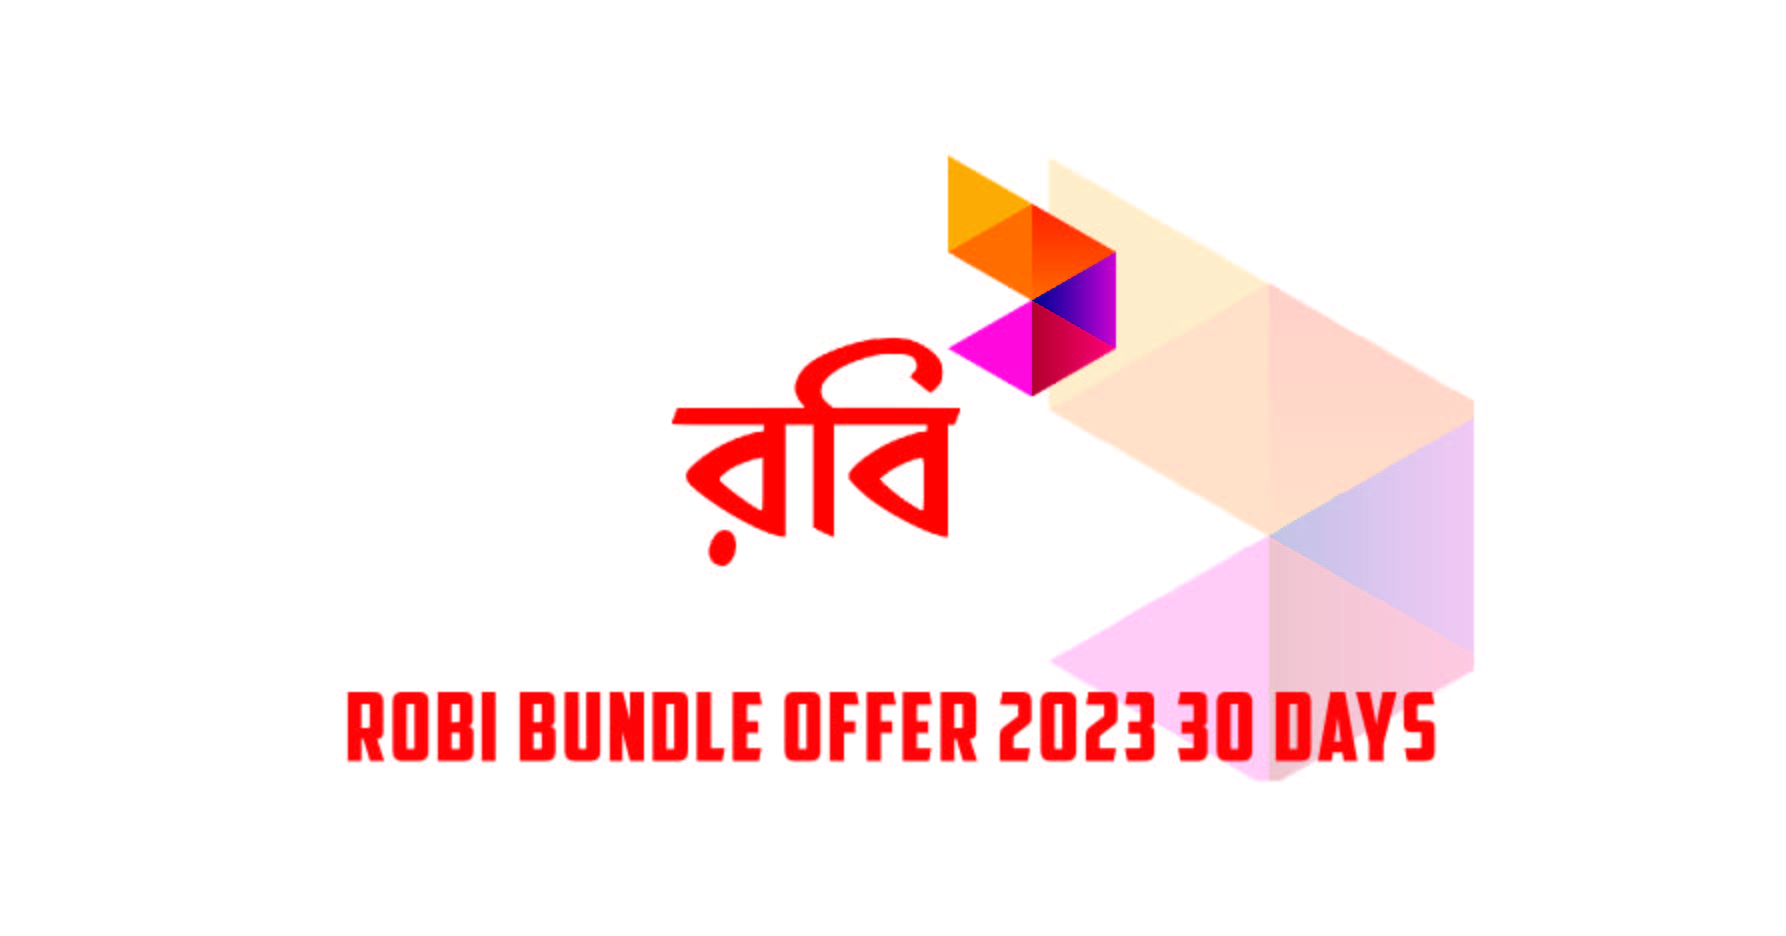 Robi bundle offer 2023 30 Days